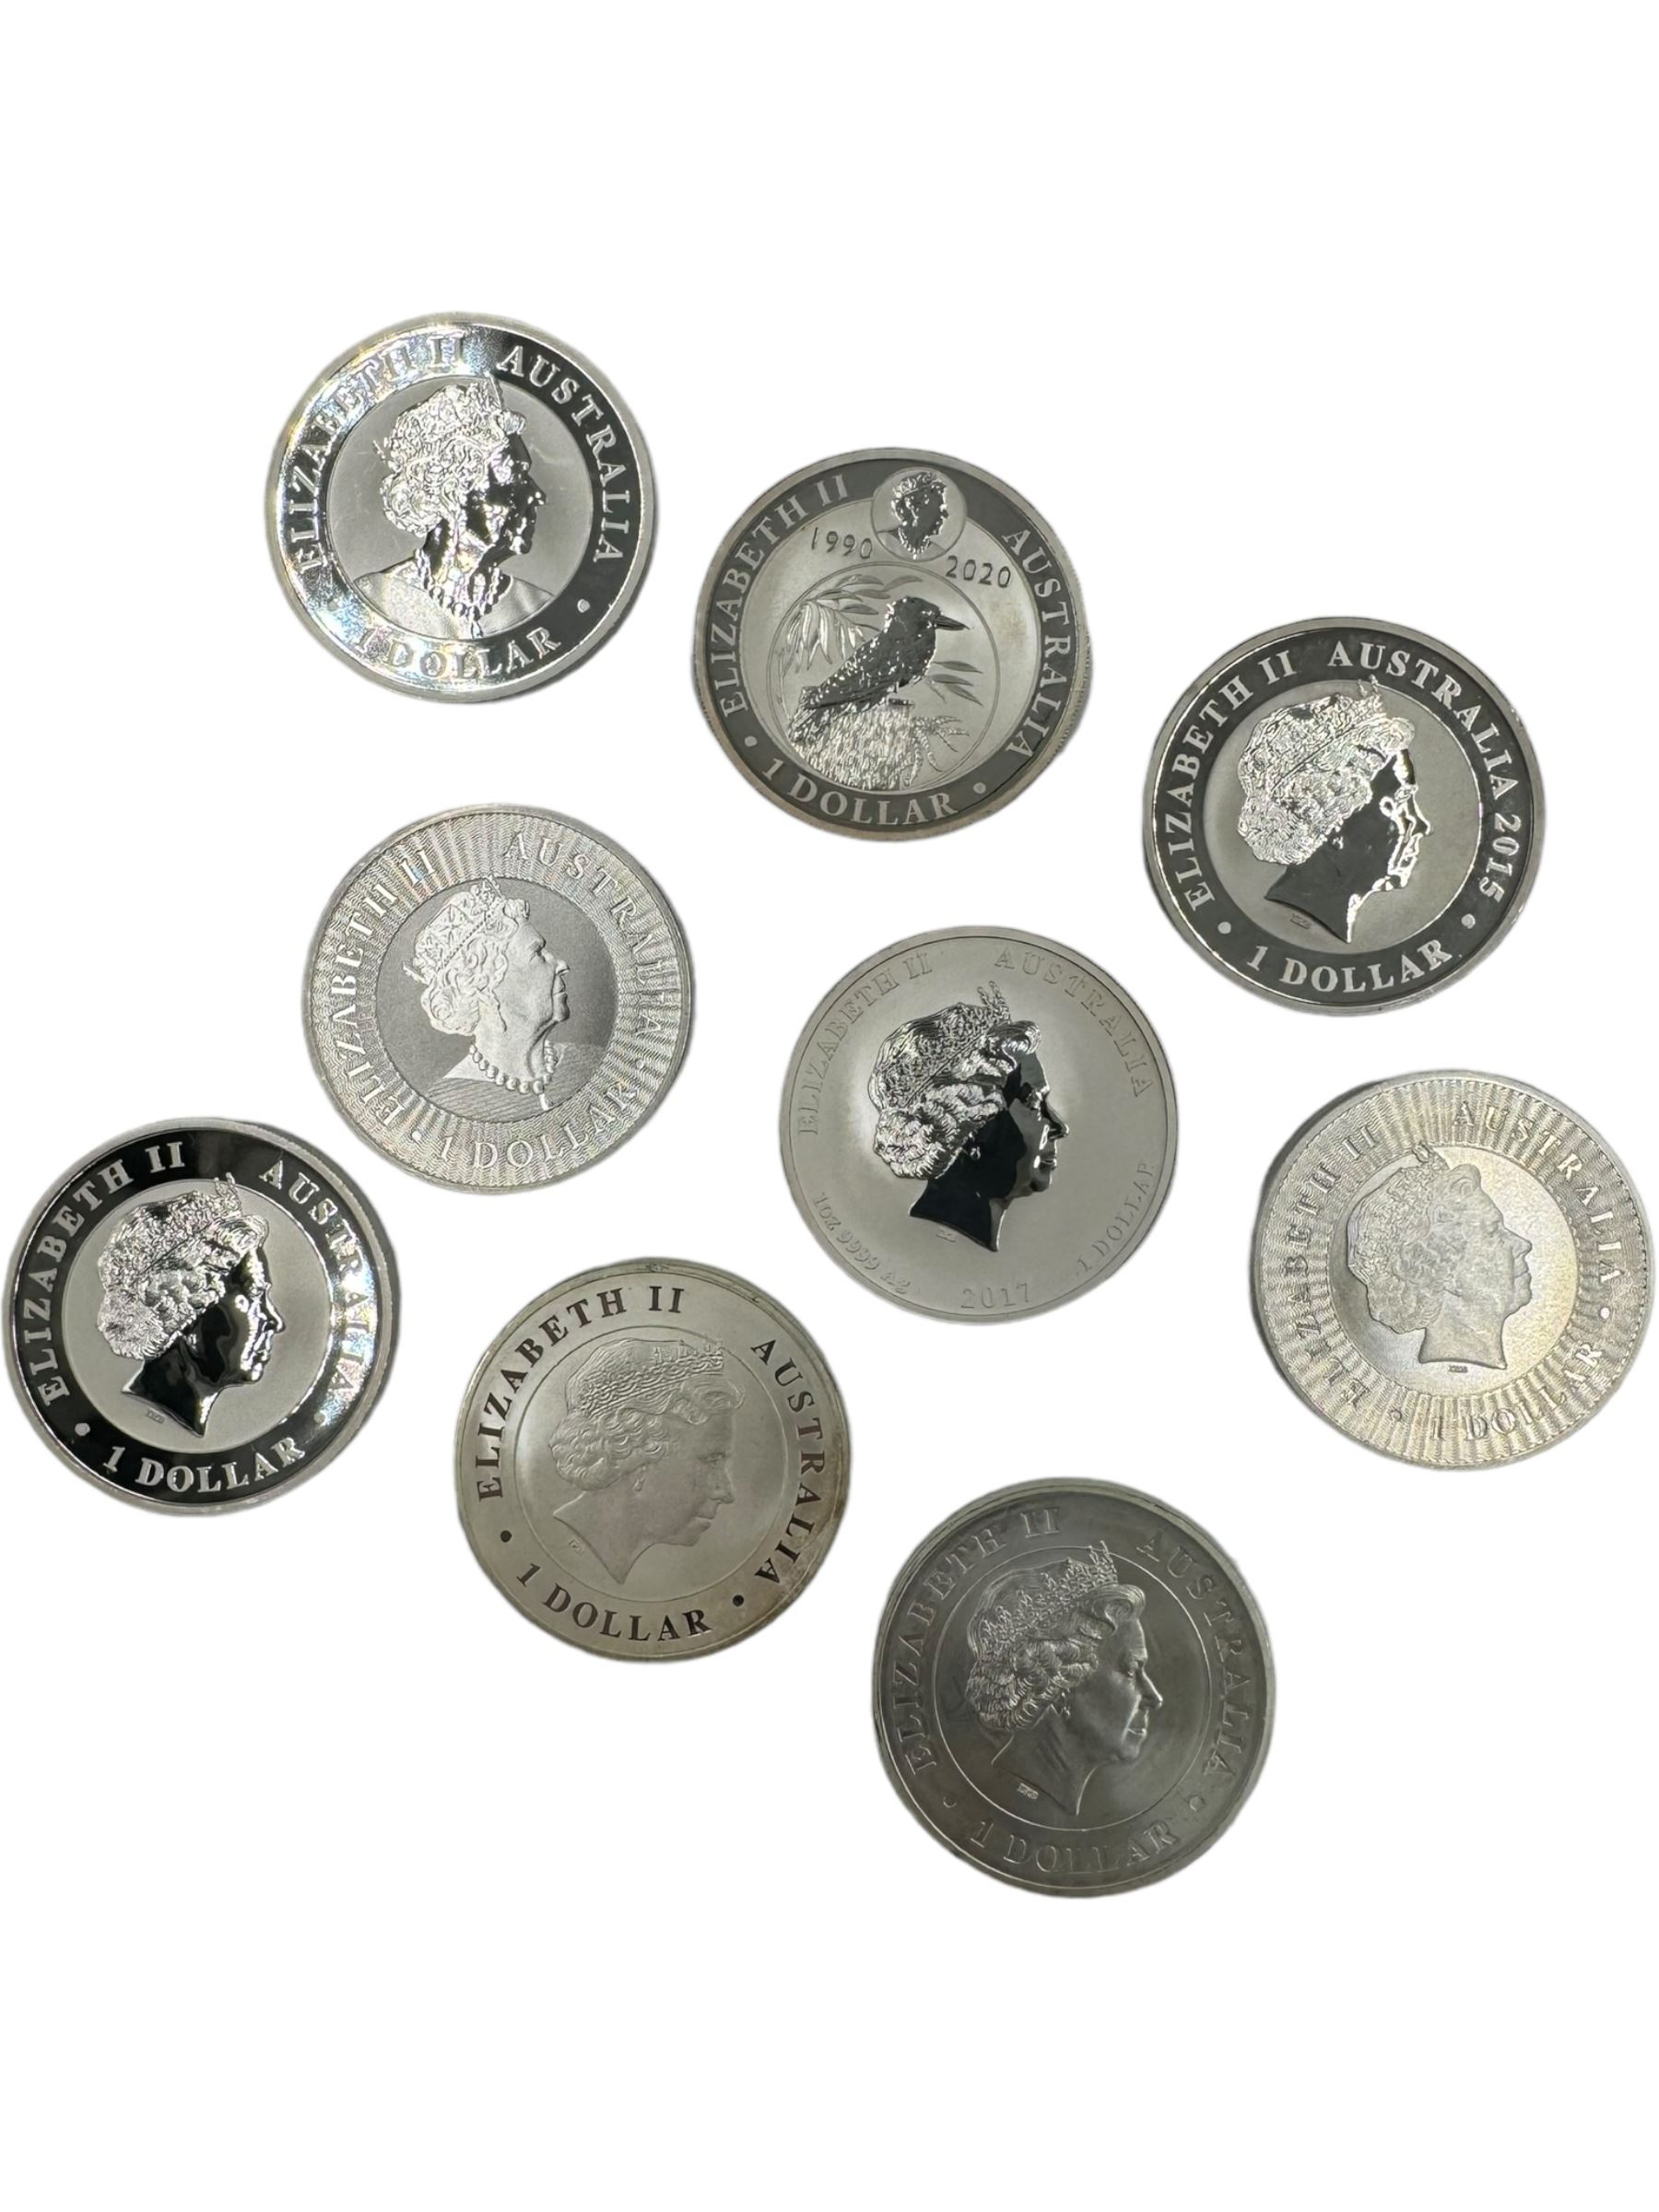 Nine Queen Elizabeth II Australia one ounce fine silver one dollar coins - Image 2 of 8